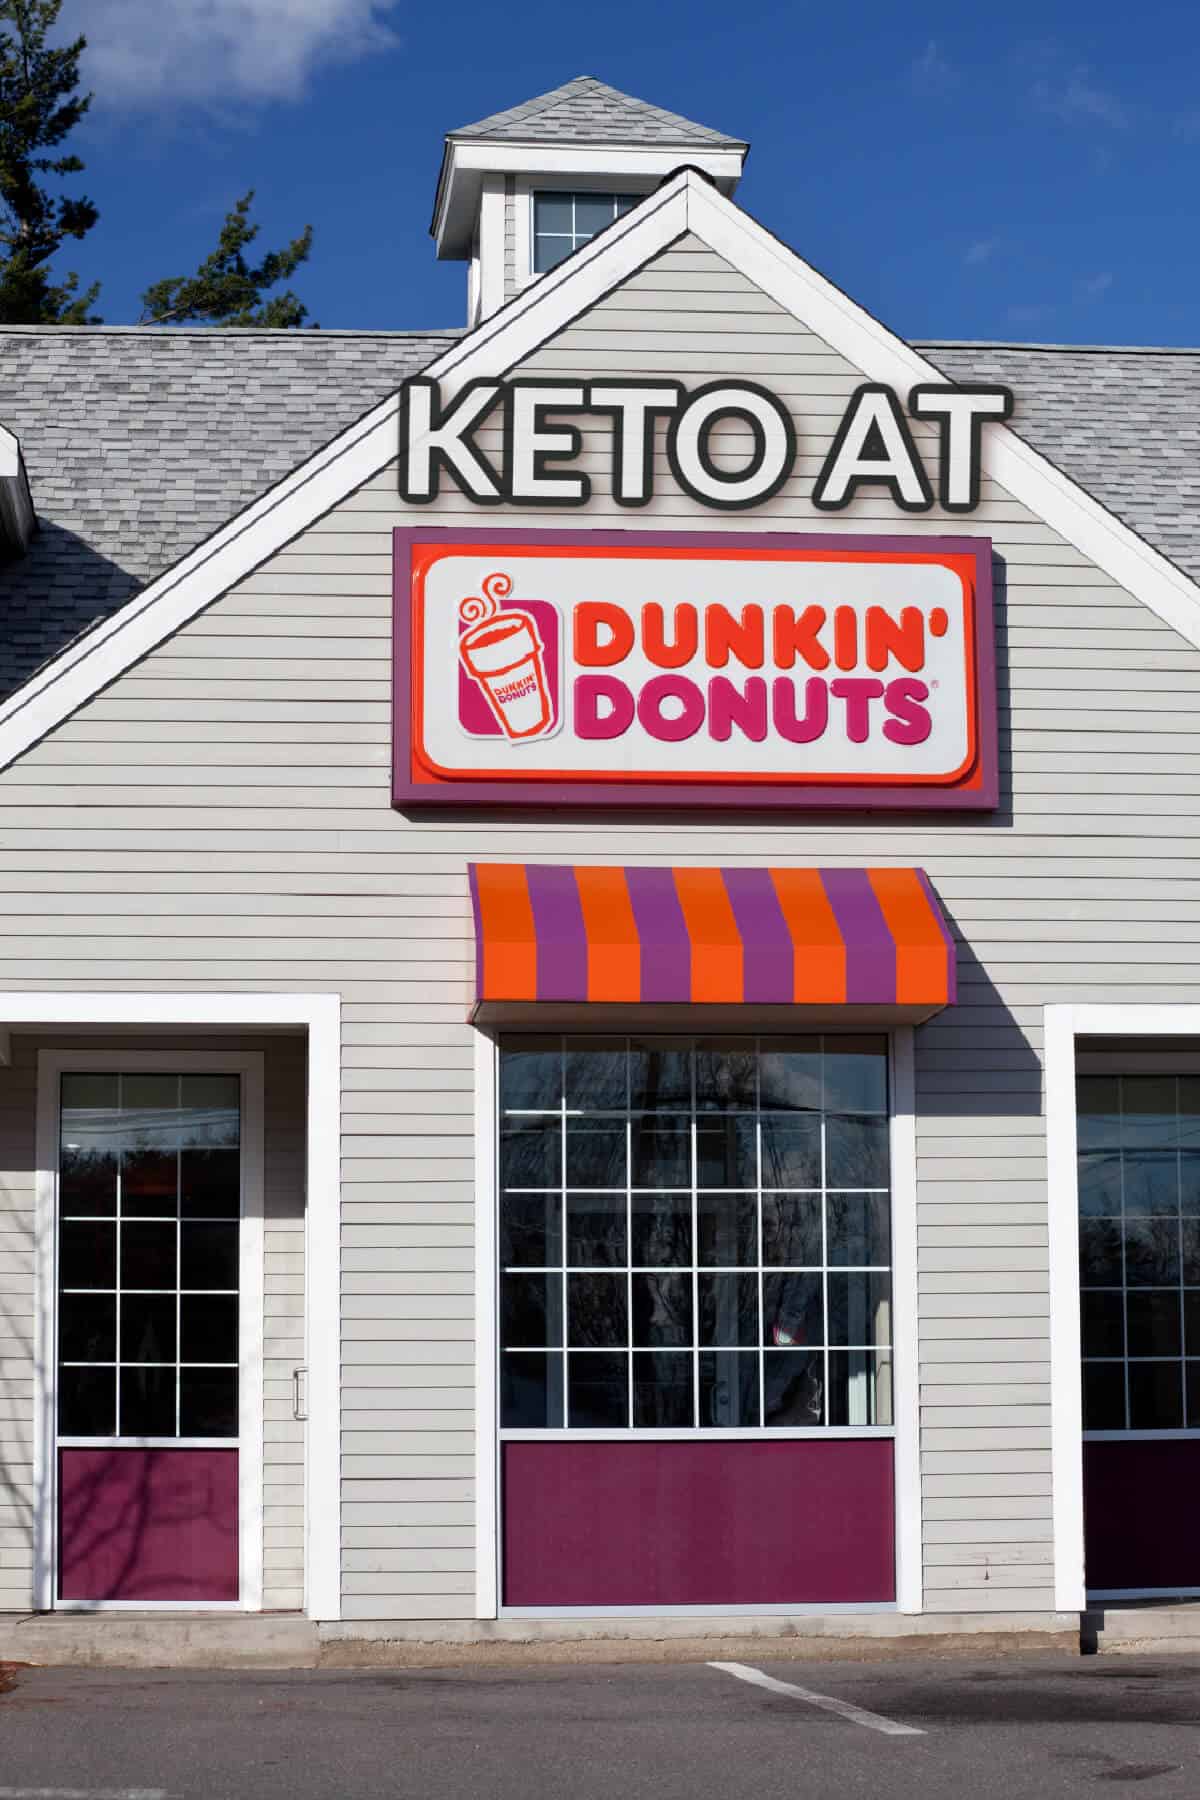 keto at dunkin donuts cover image